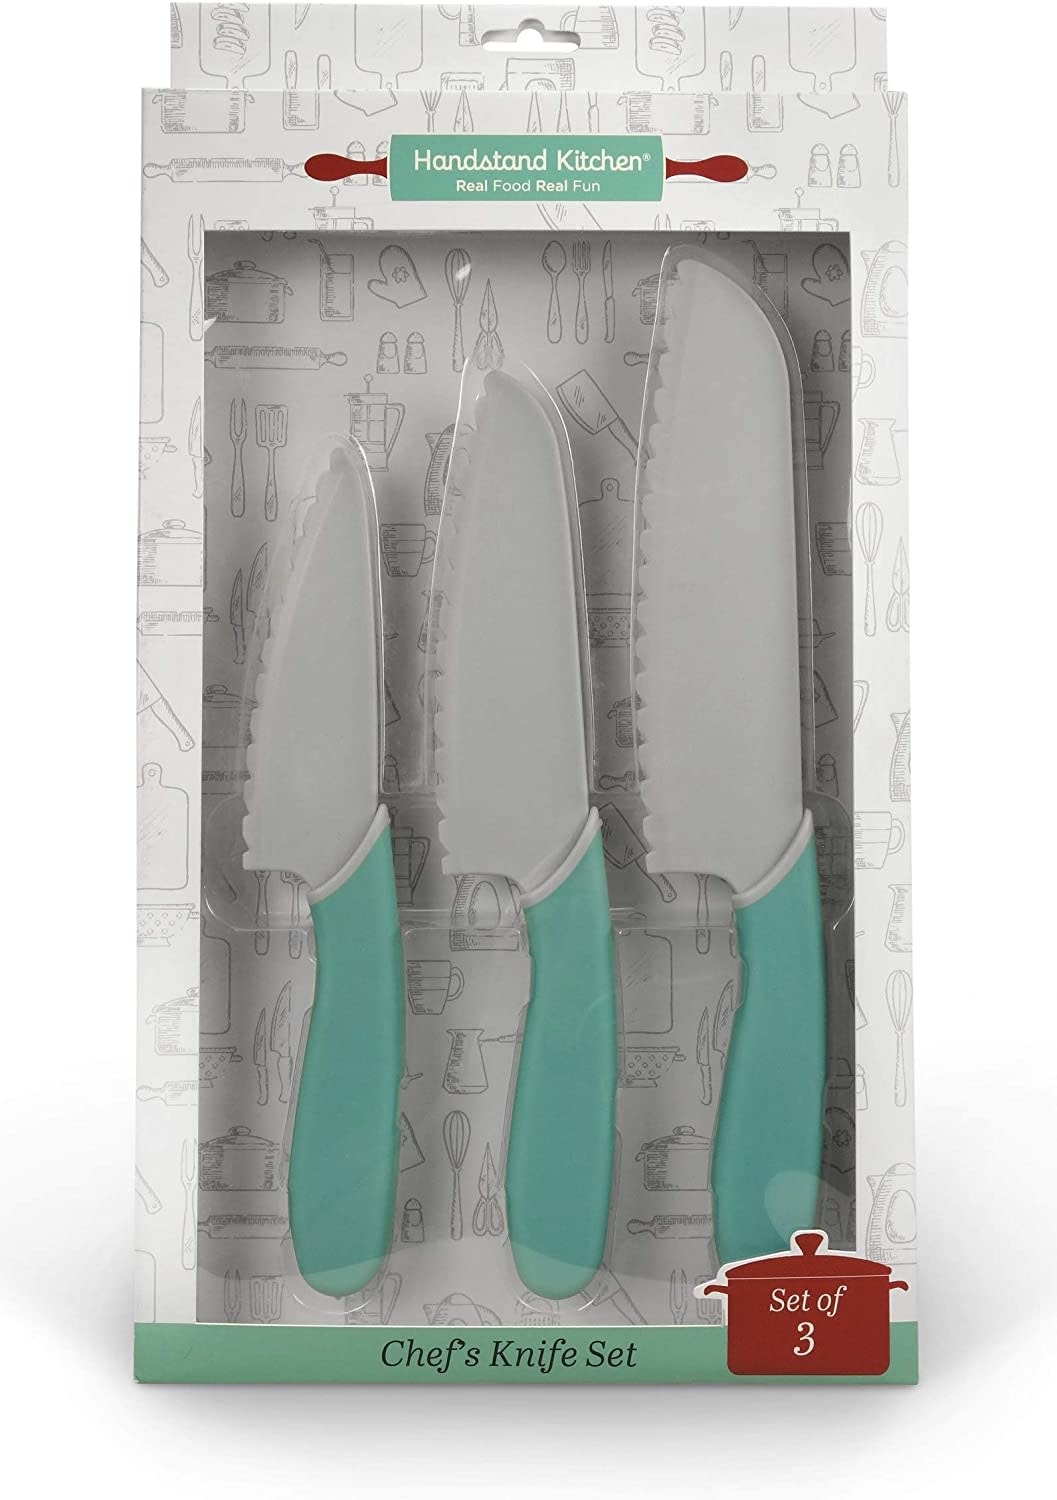 3 Pcs Kids Kitchen Knife, Plastic Serrated Edges Kids Knife Set